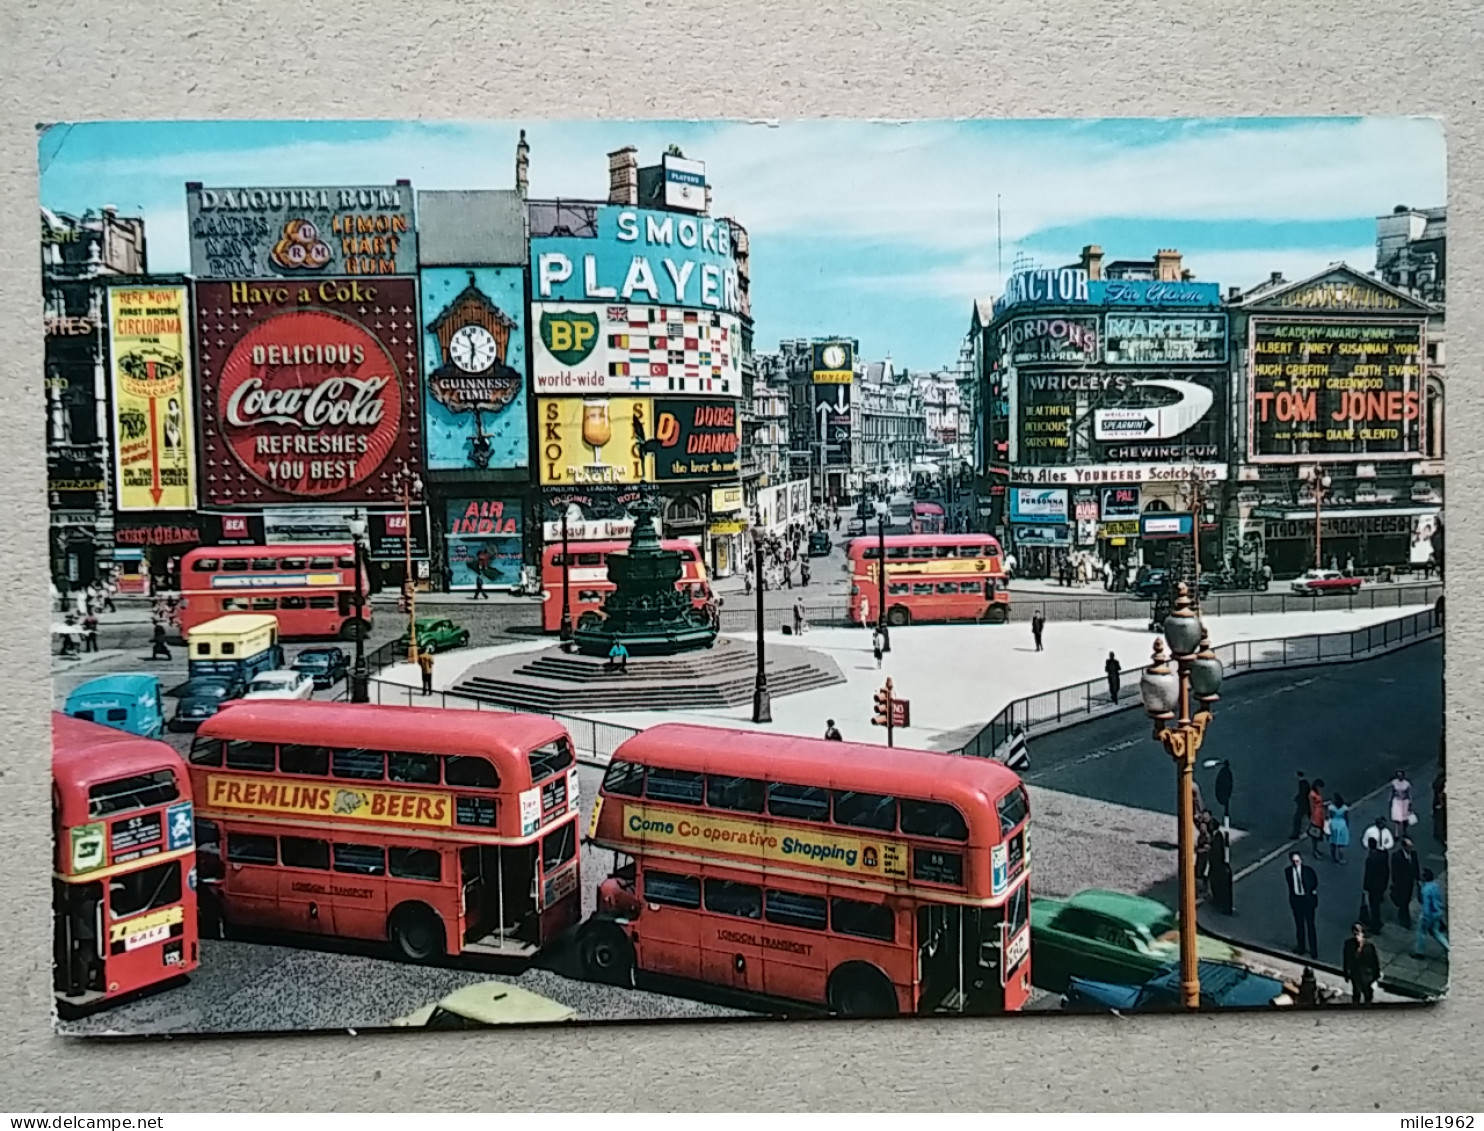 KOV 540-14 - LONDON, England, Bus, Autobus, Coca Cola - Piccadilly Circus